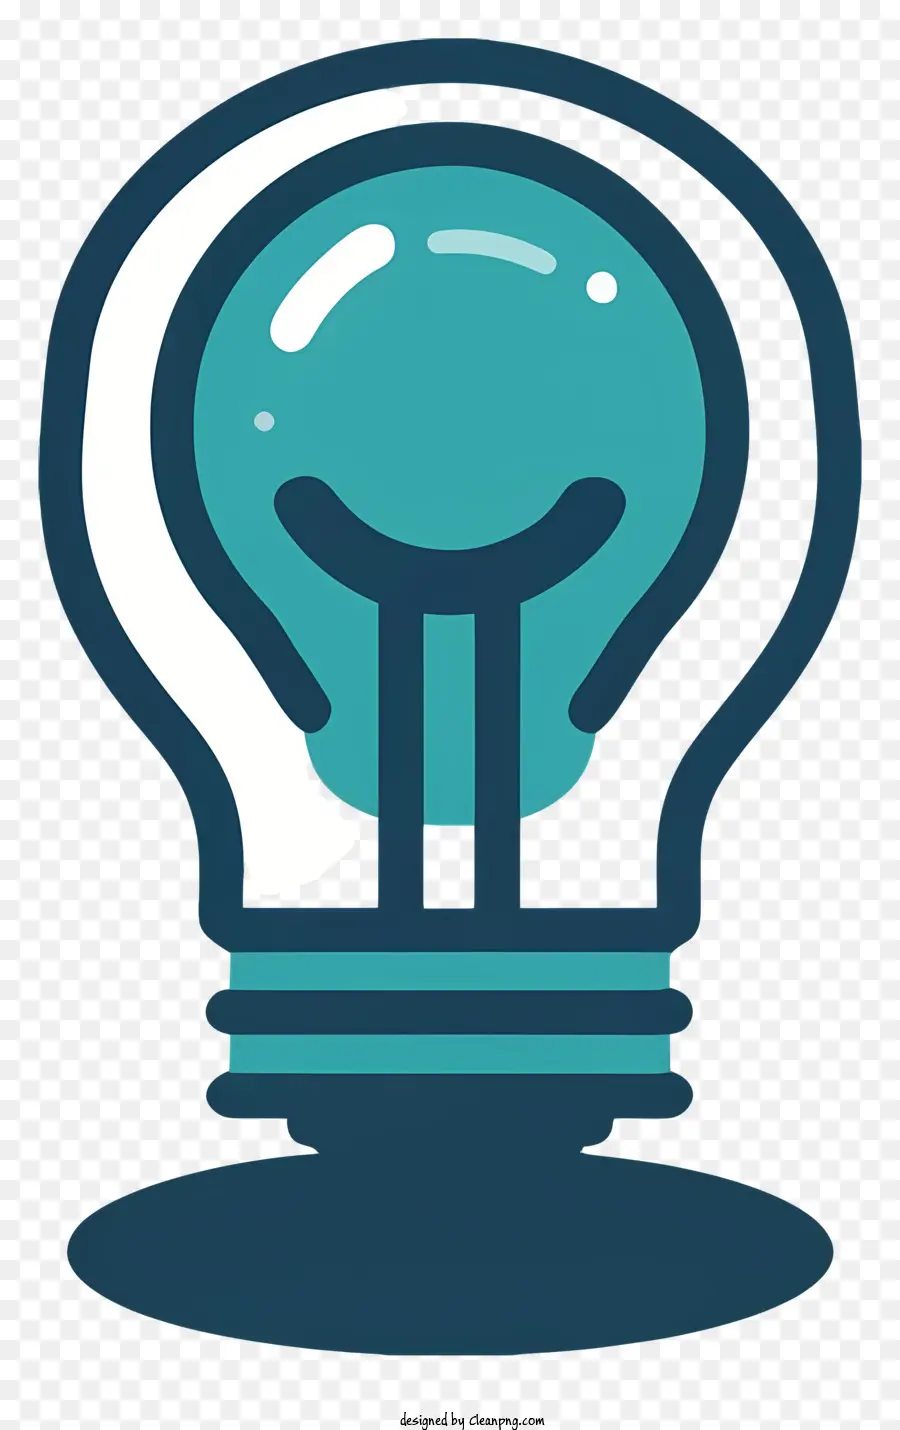 light bulb with eagle icon eagle icon in light bulb blue reflective light bulb eagle symbolism in logo